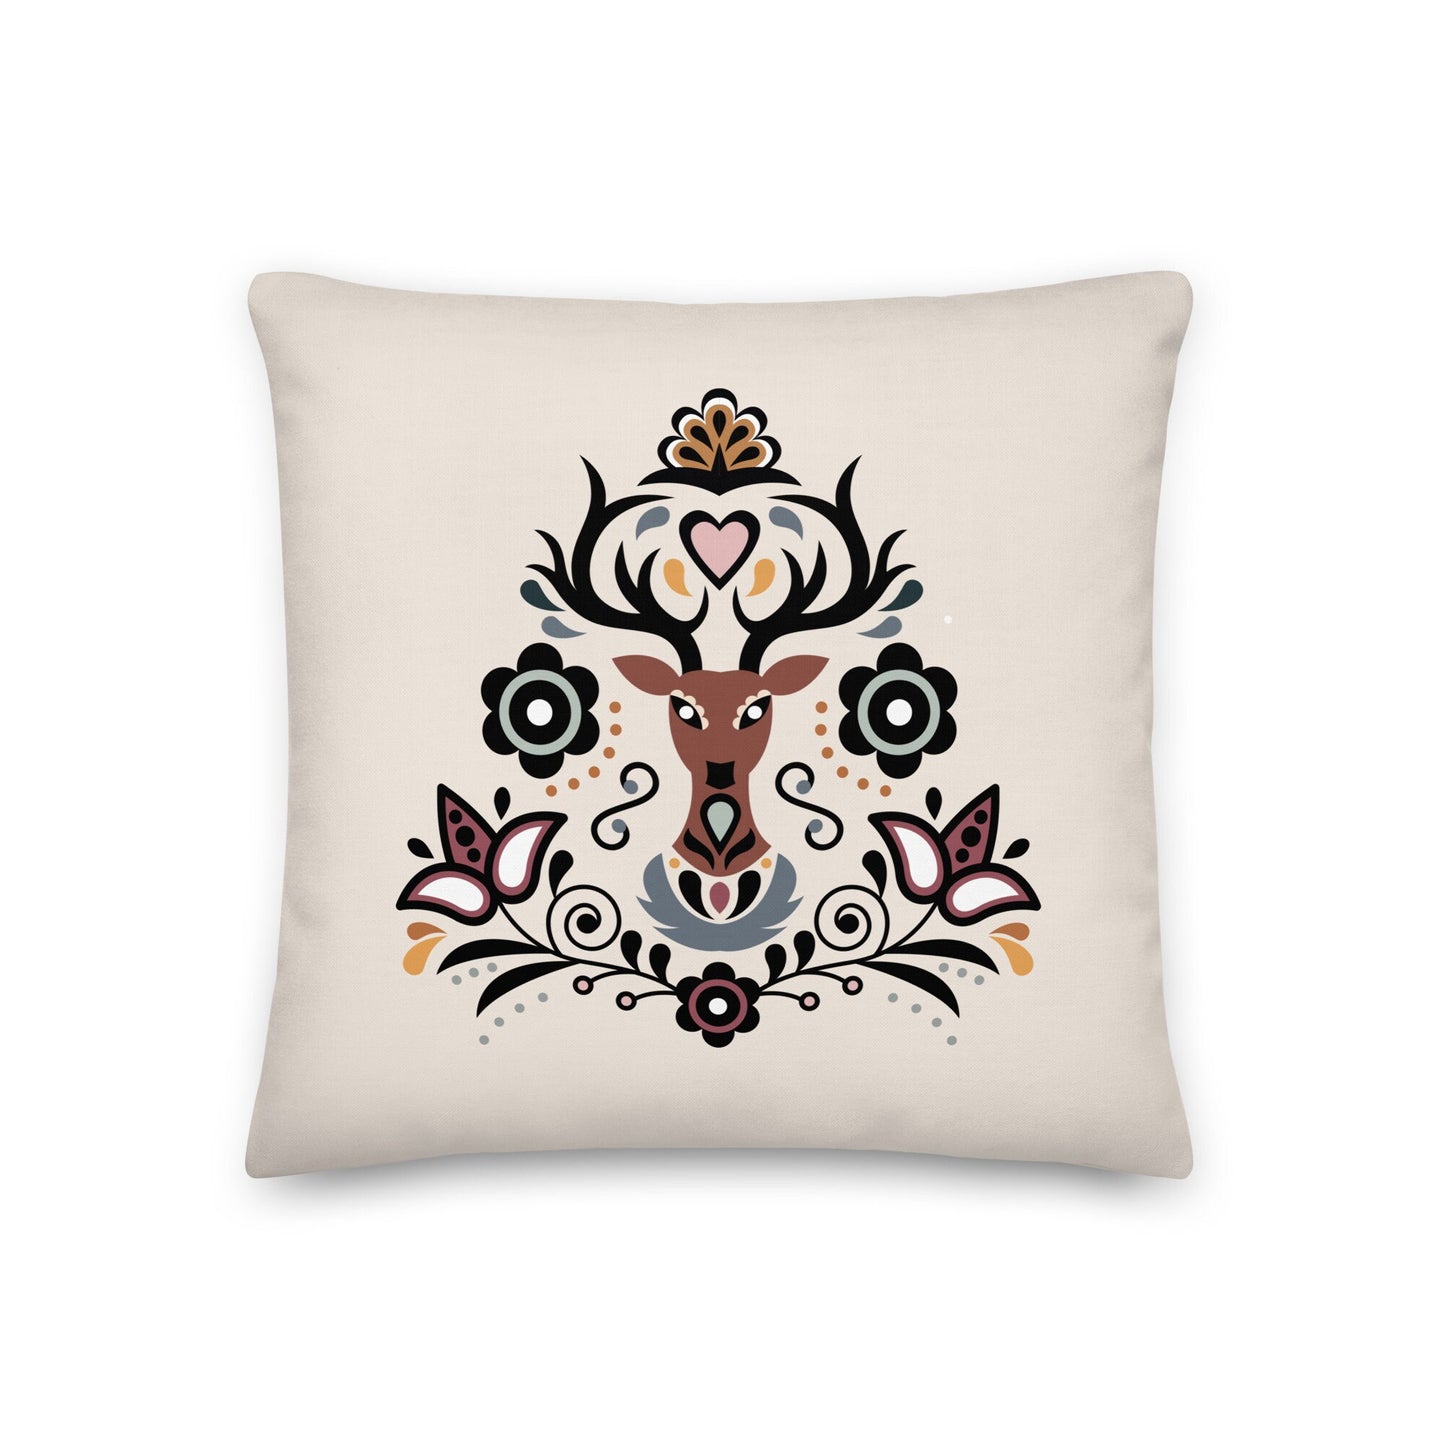 Swedish Deer Throw Pillow, Scandinavian Hygge Pillow, Nordic Decor, Decorative Pillow, Housewarming Gift- Christmas Decor, Indoor, Outdoor